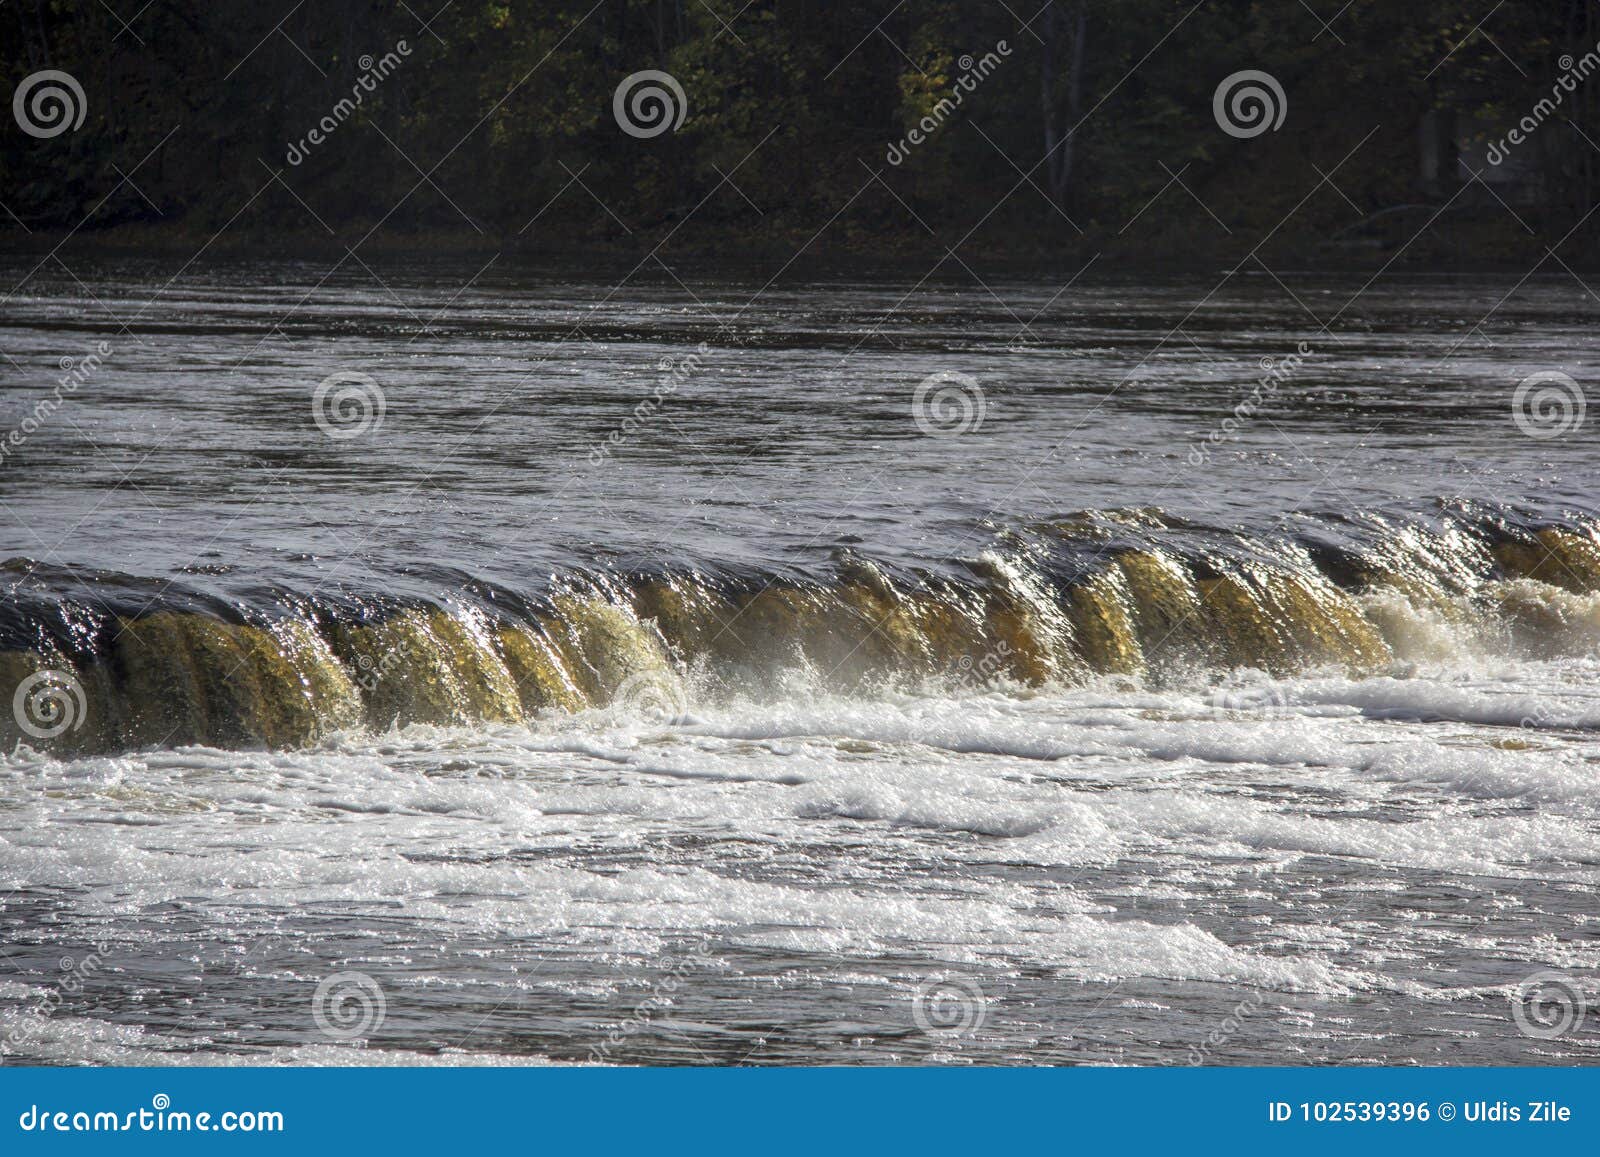 the widest waterfall in europe in latvia kuldiga. river venta.